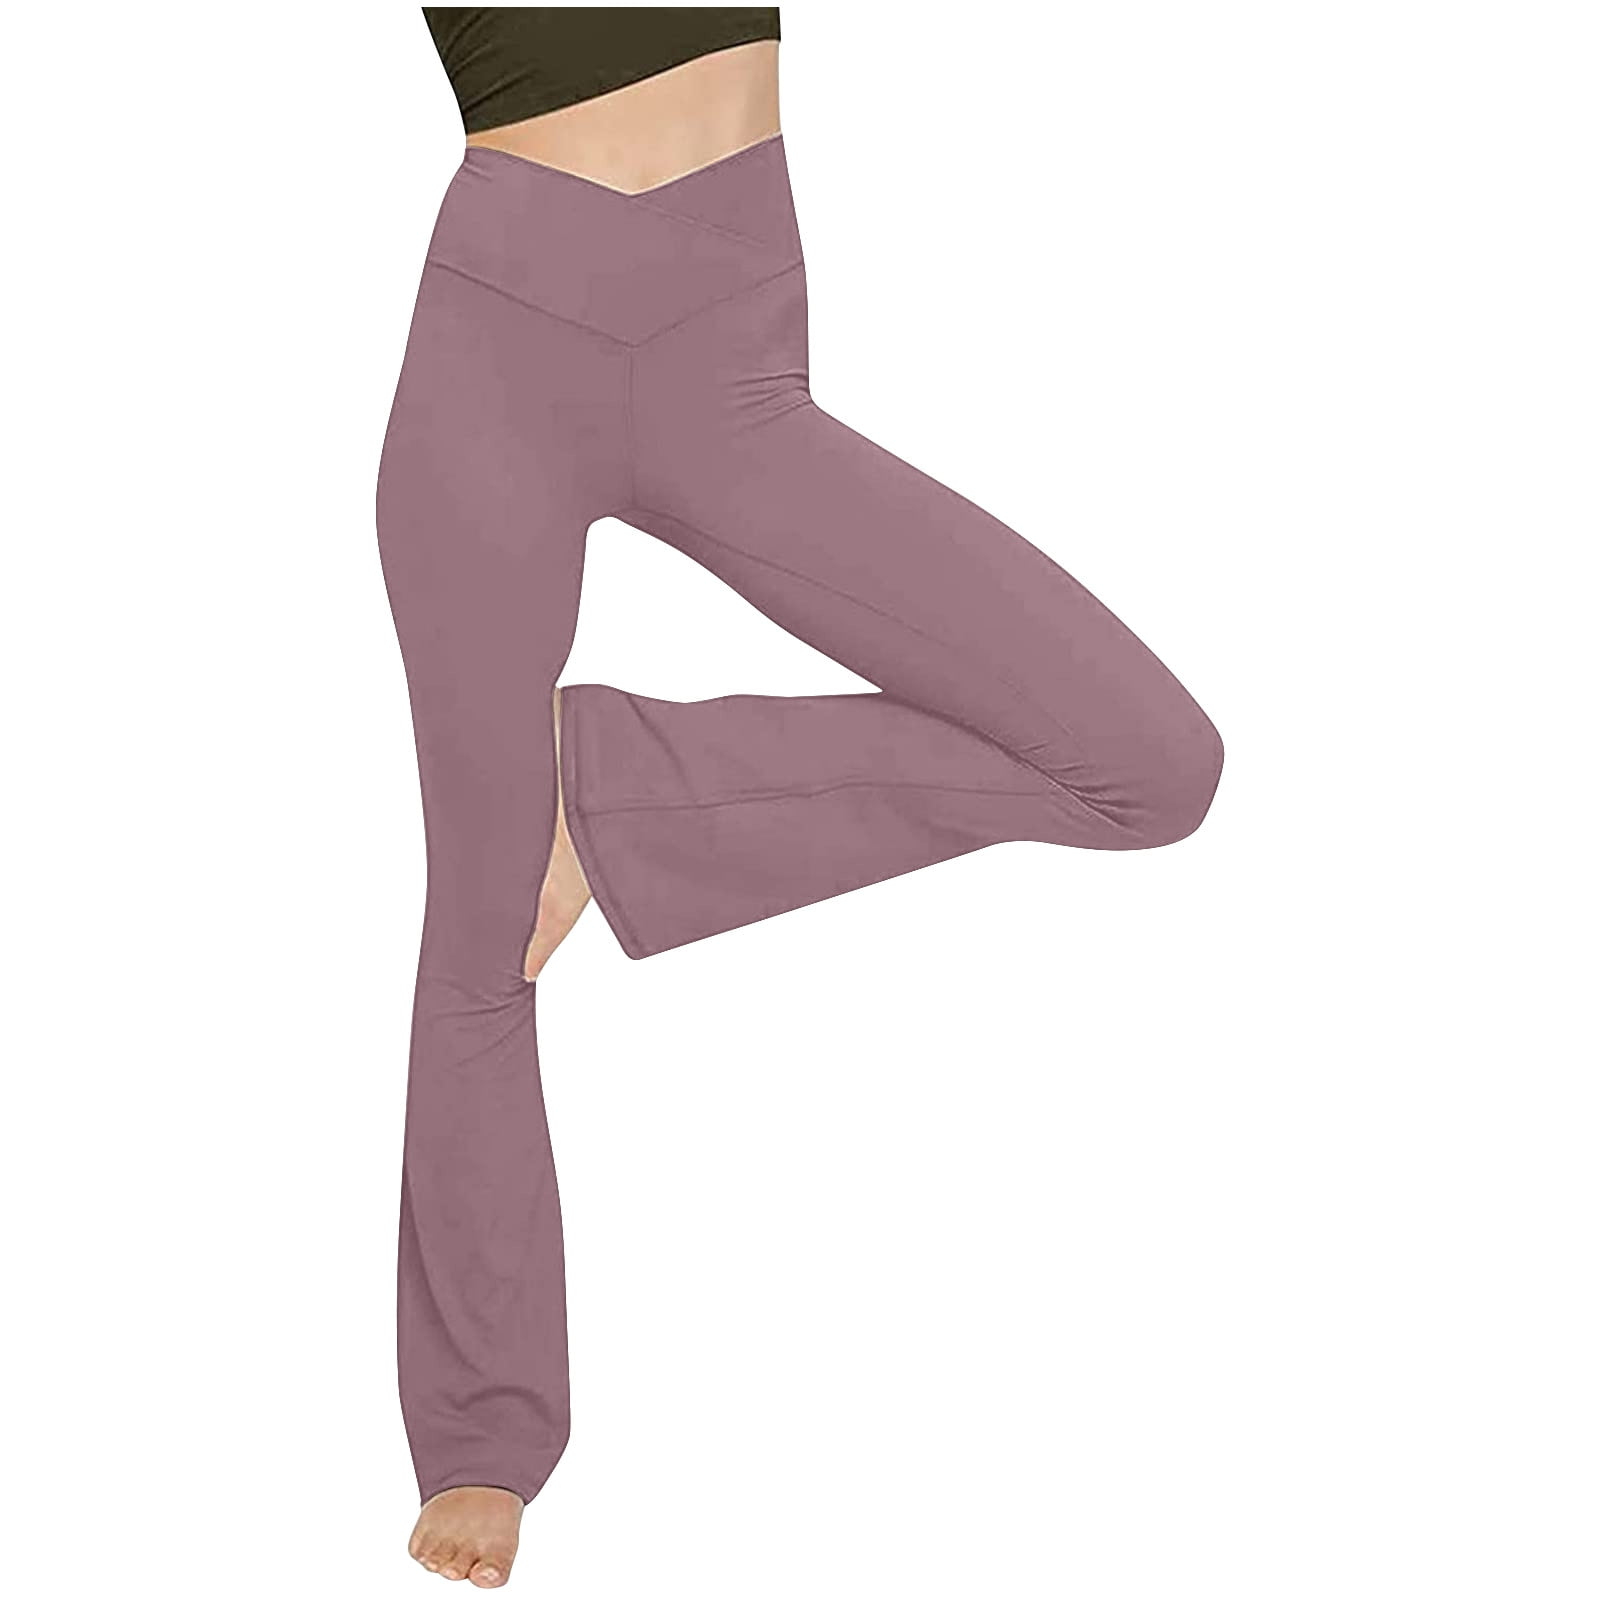 YWDJ Yoga Pants Flare Petite Length Women Trousers High Elastic High Waist Flared  Pants Thin Yoga Pants Physical Fitness Pants Purple XS 